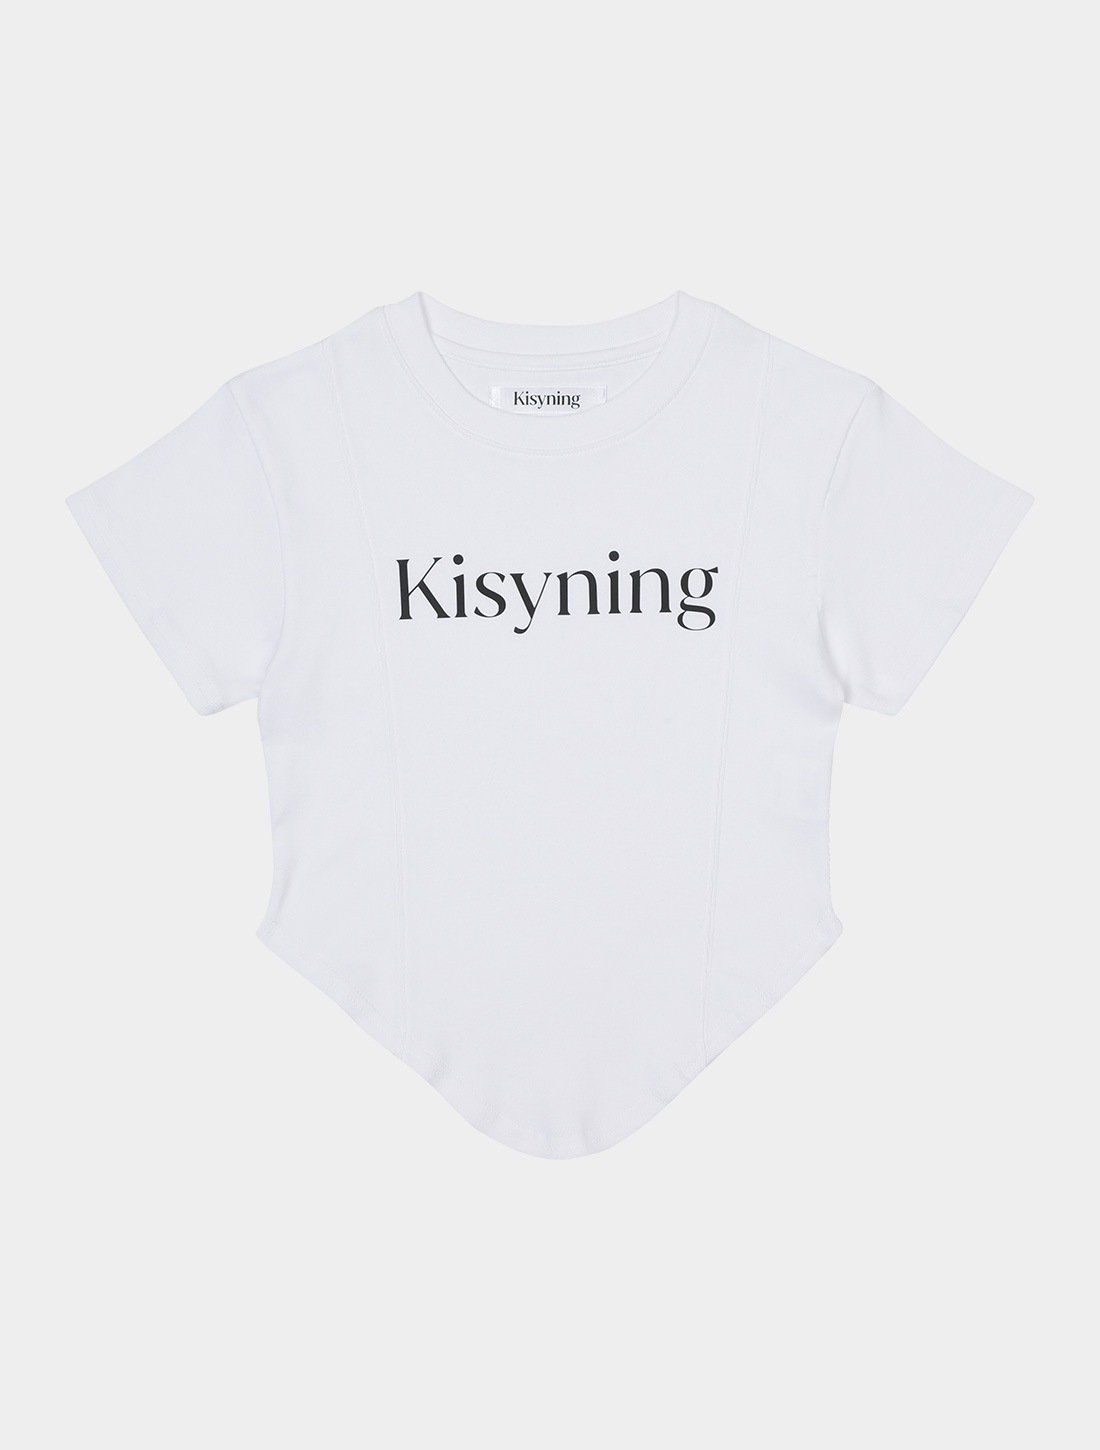 Kisyning round T-shirt (white)